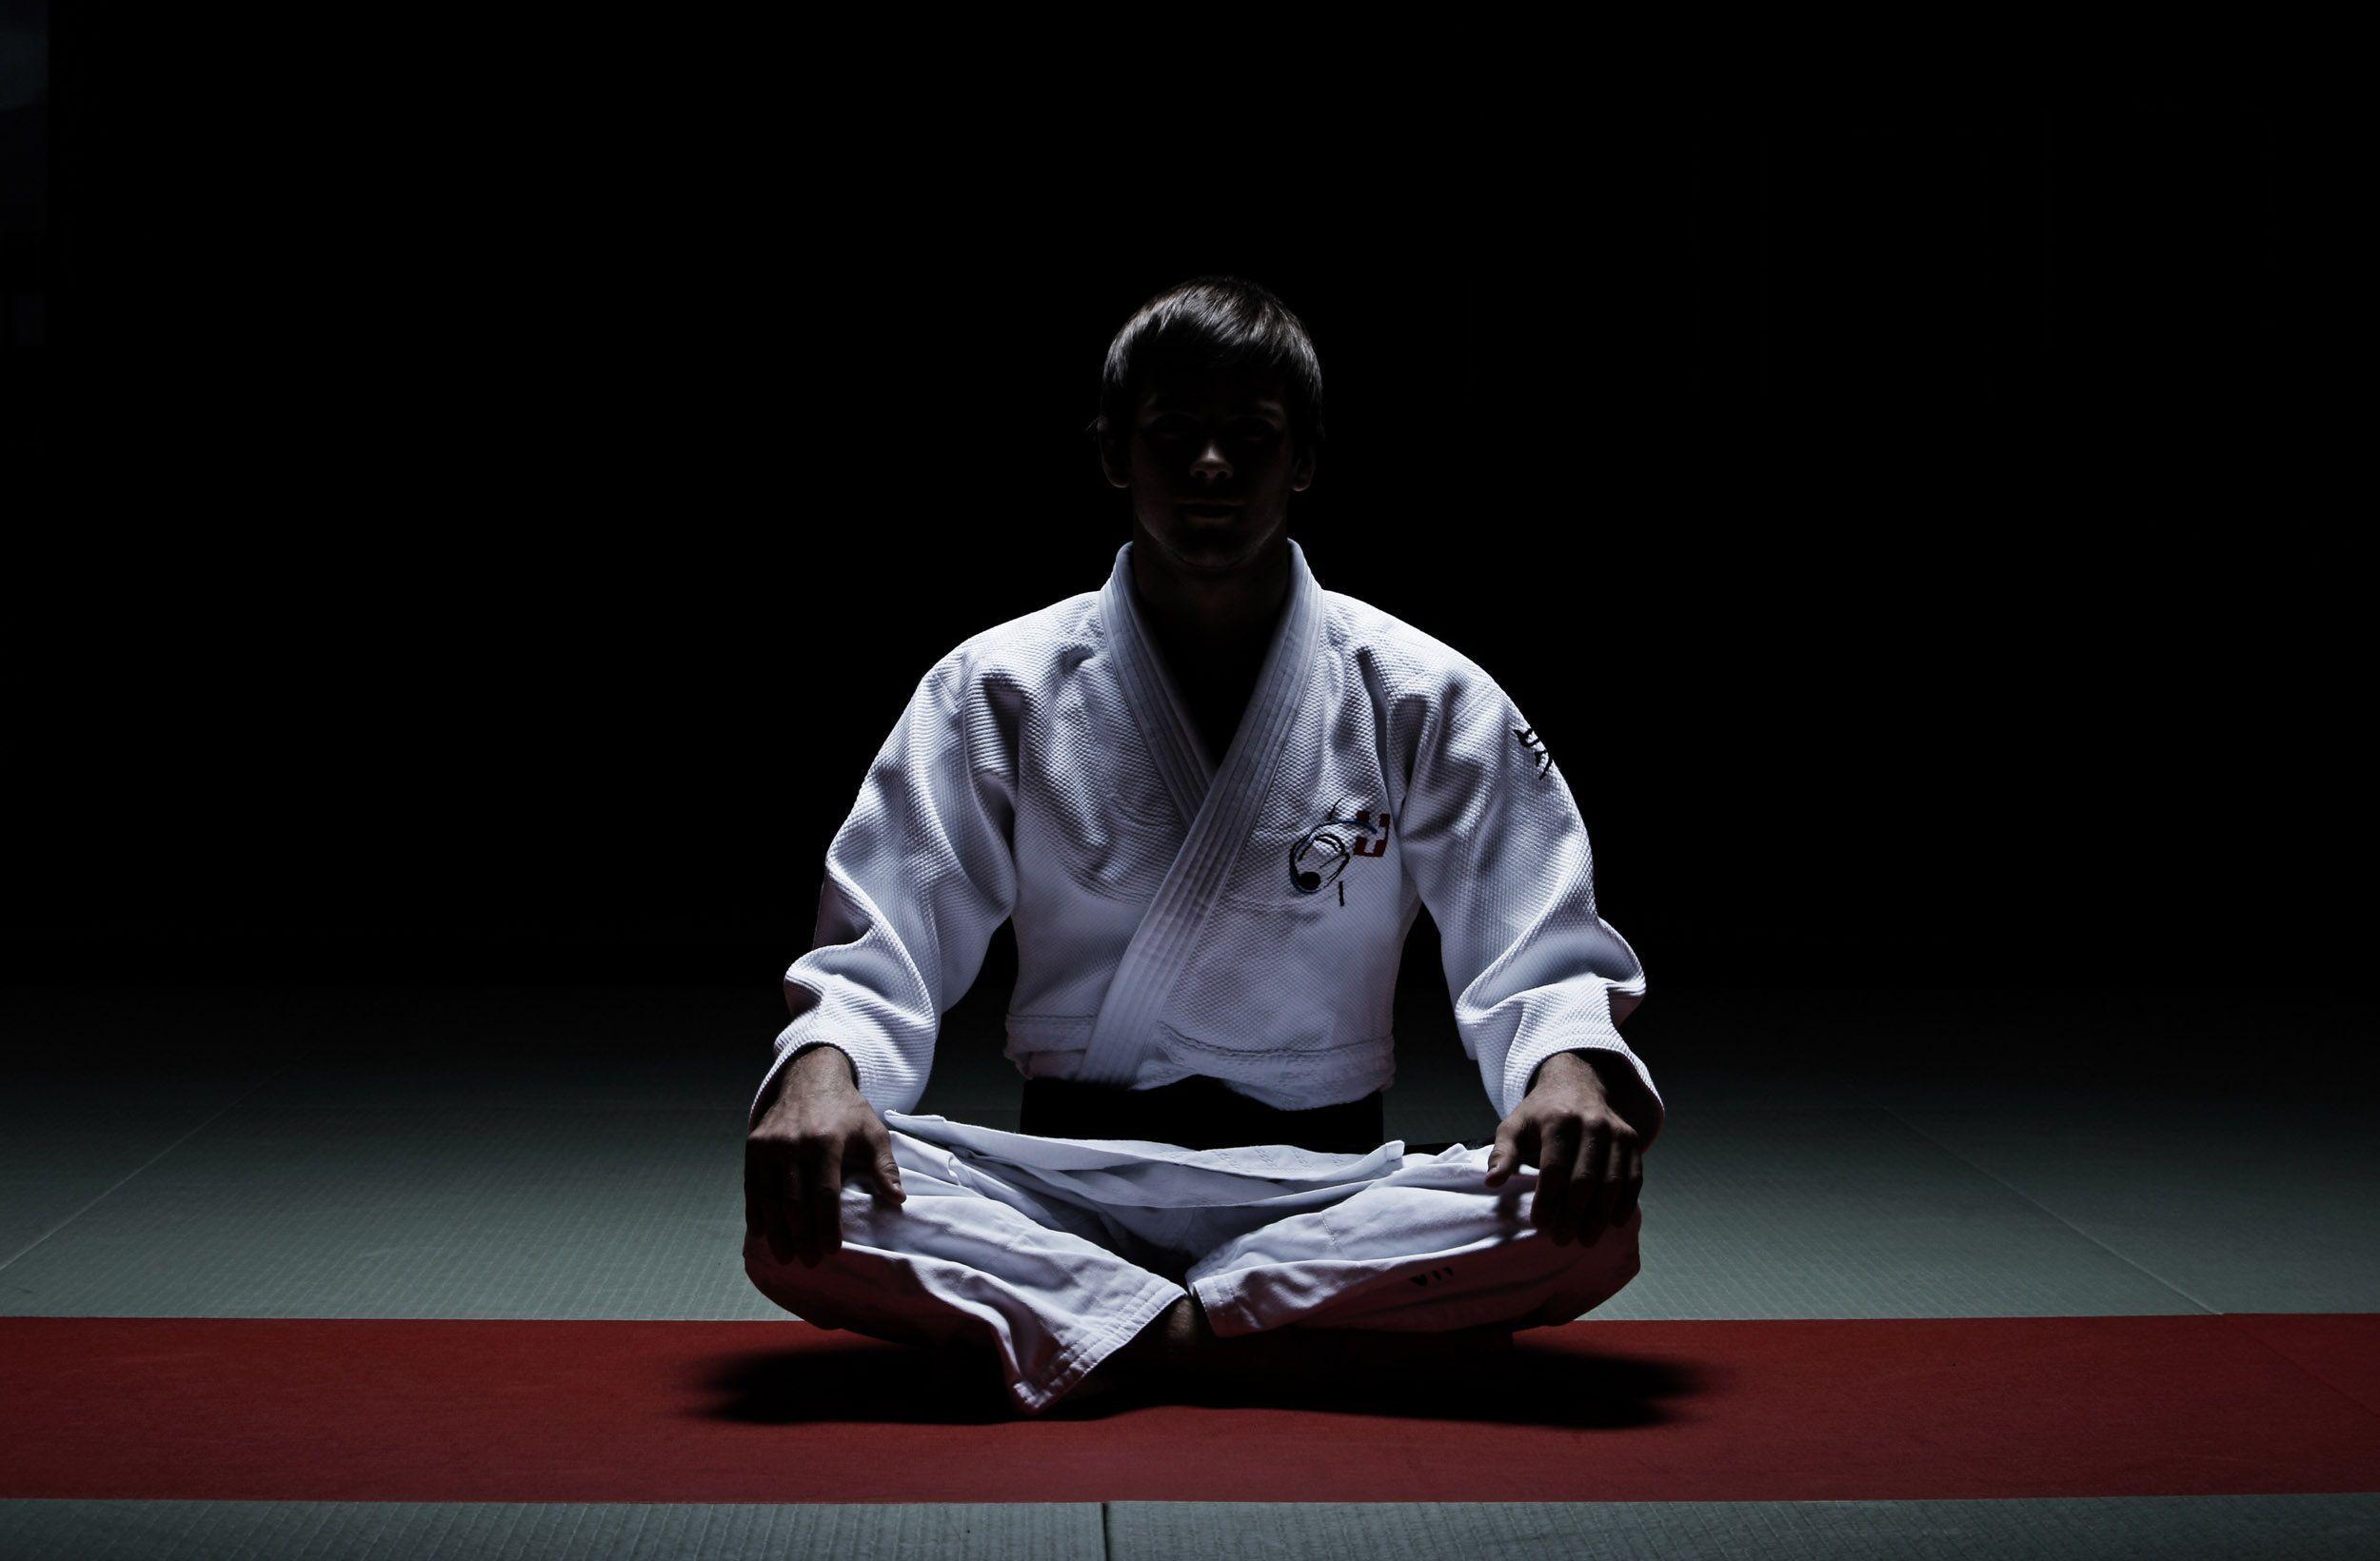 Judo Free HD Wallpaper Image Background